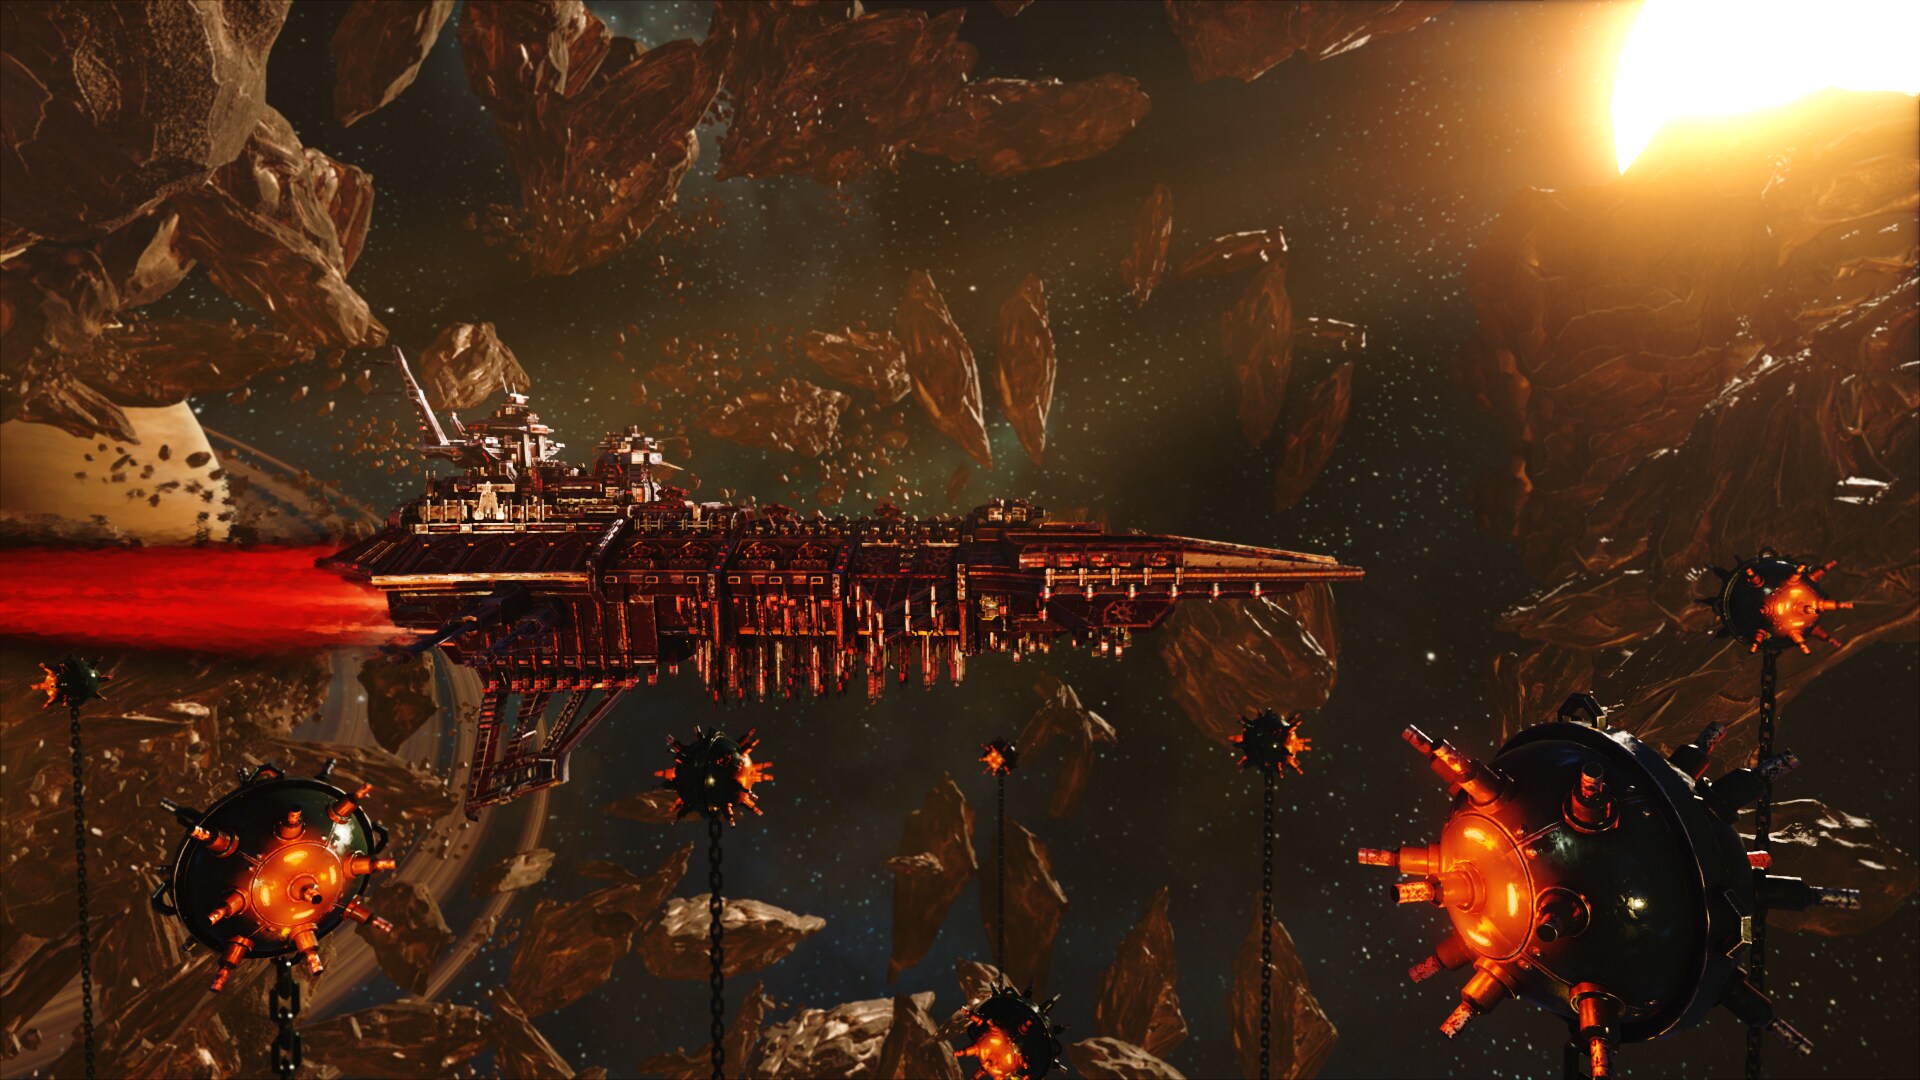 Battlefleet Gothic Armada Steam Key Global G2a Com - khaos imperium roblox